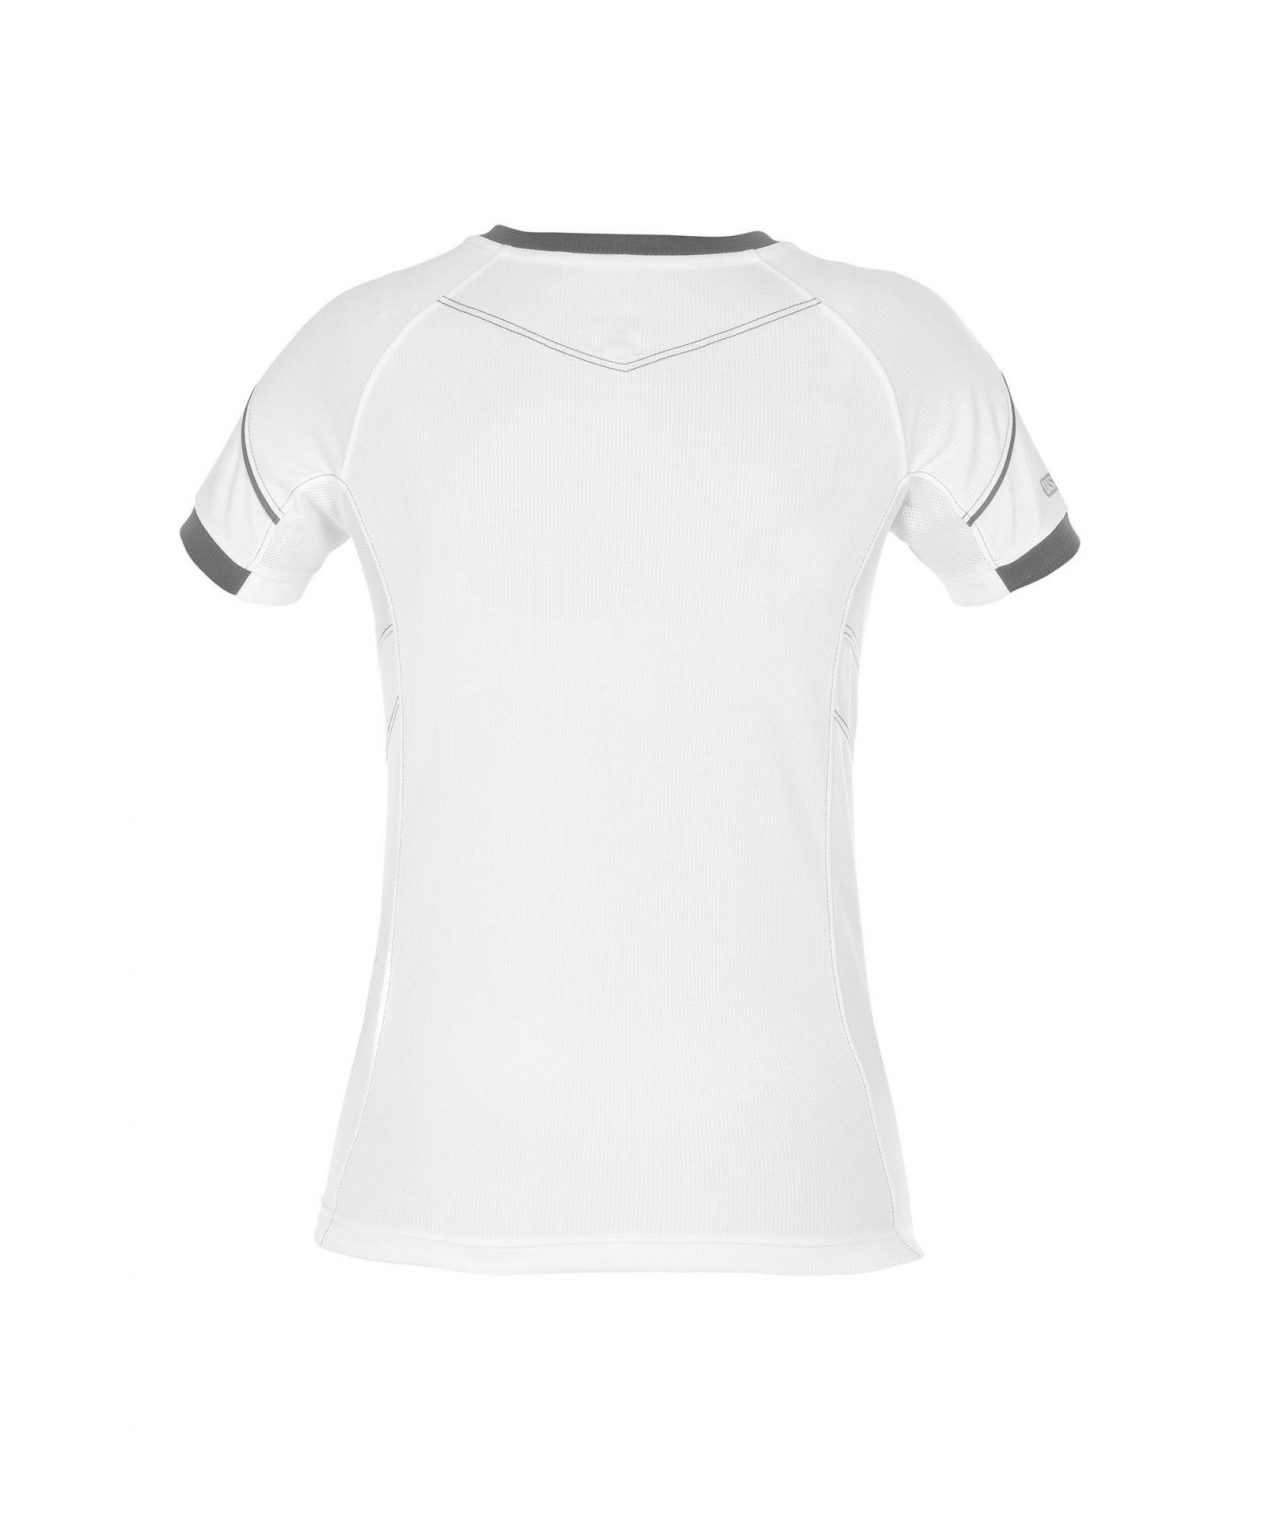 nexus women t shirt white anthracite grey back